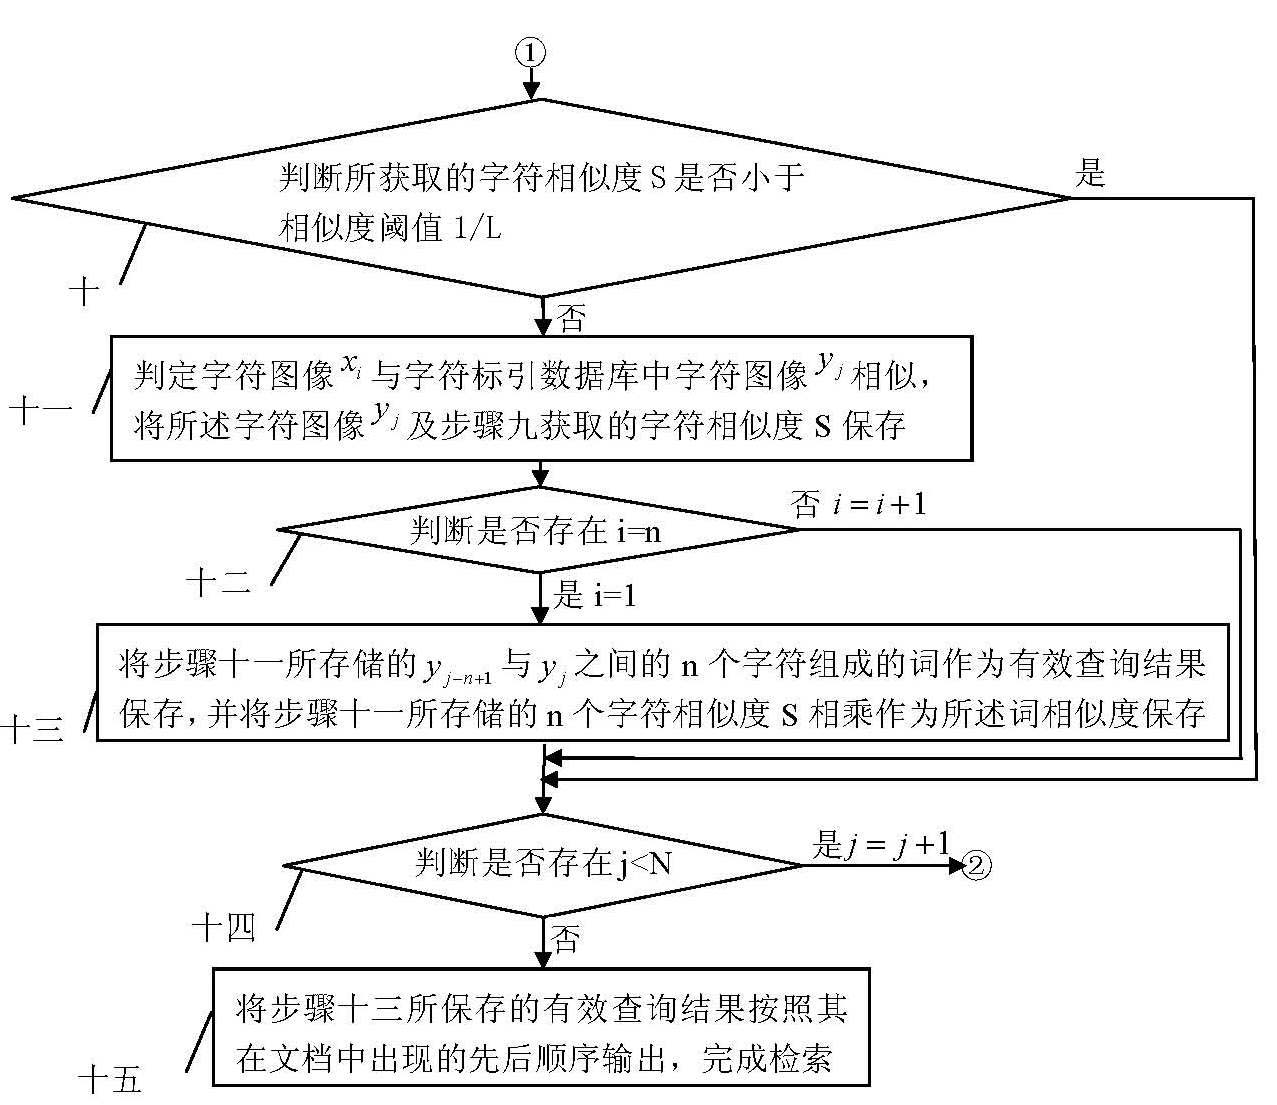 Image formula Chinese document retrieval method based on content